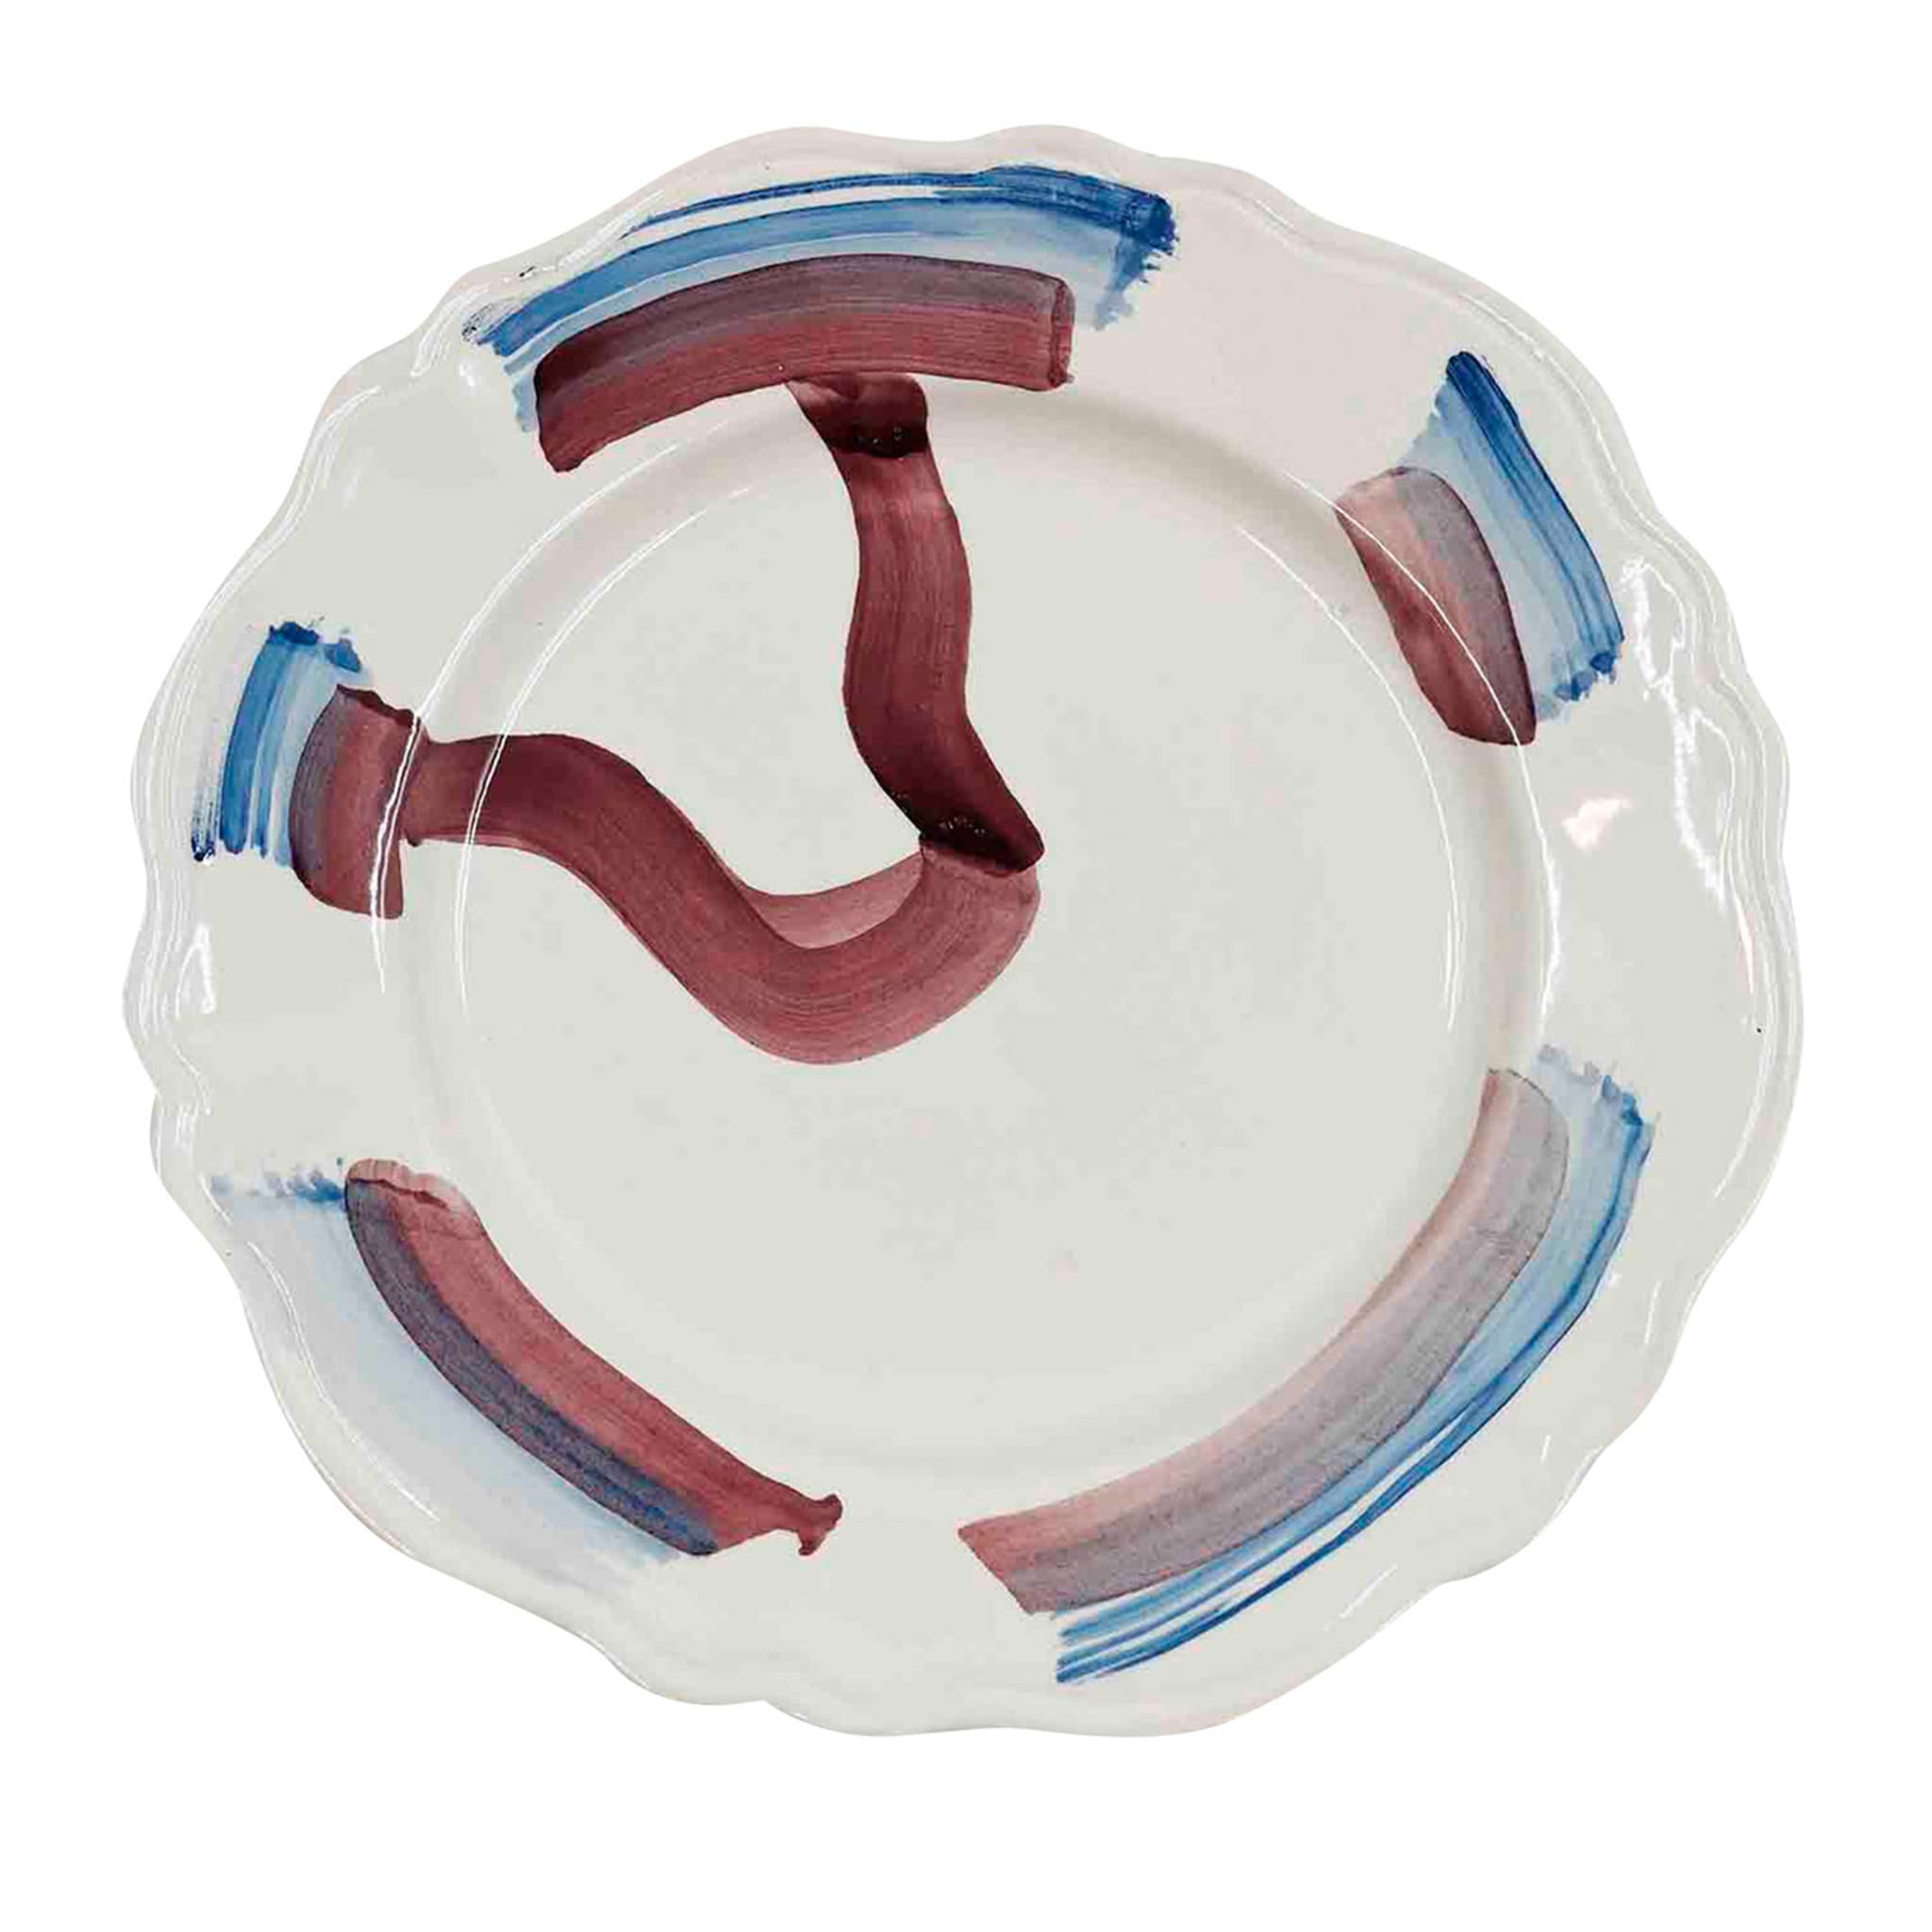 Italian Ceramic Artisan Handcrafted Plate